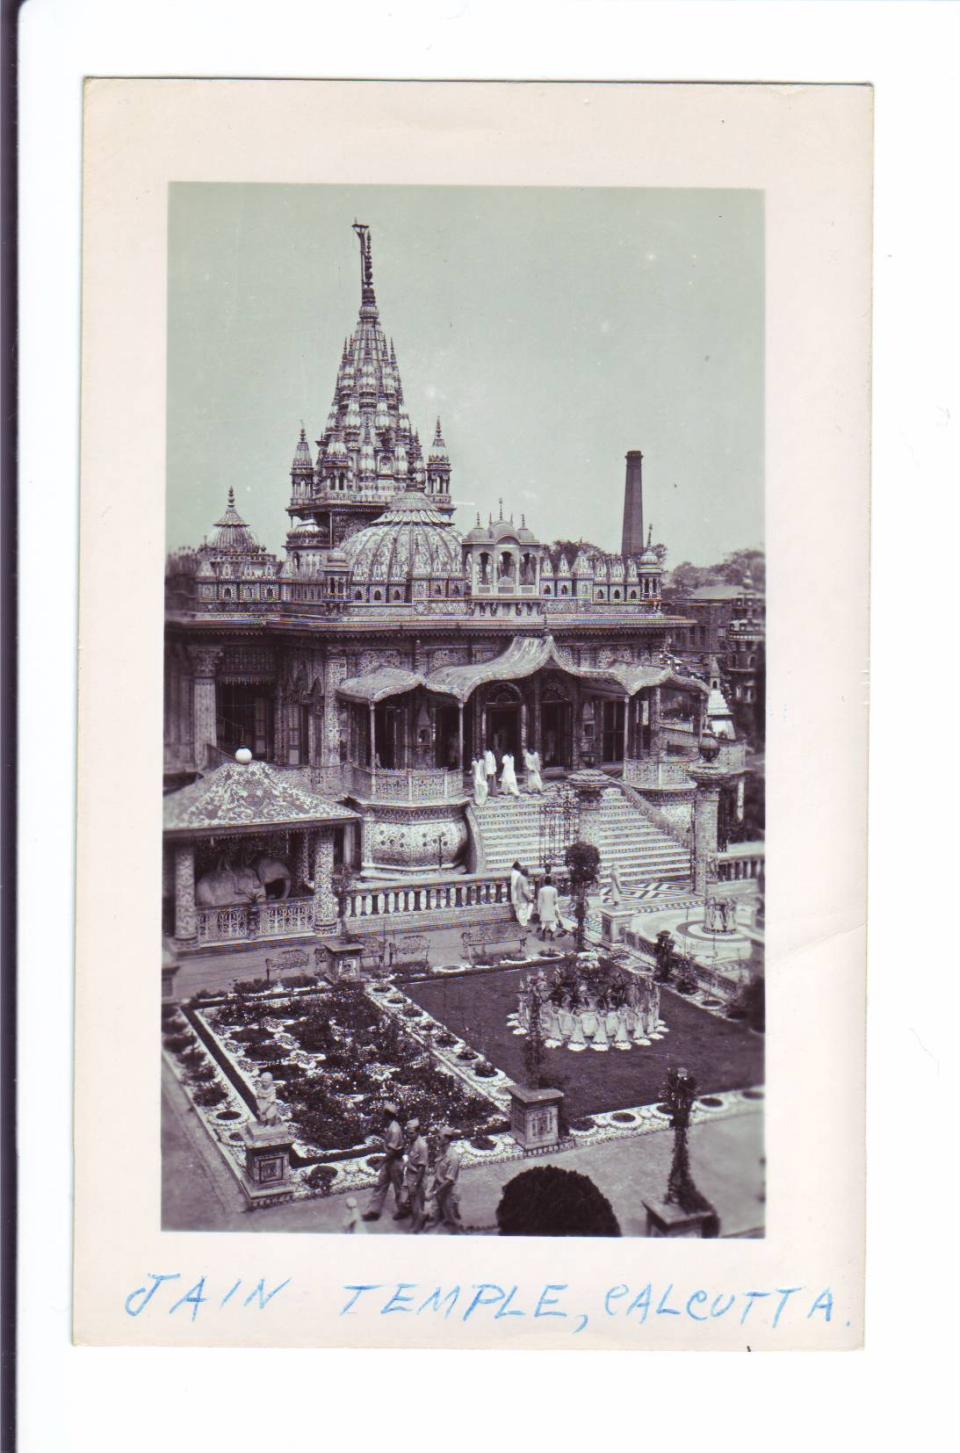 Photo #70
The Jain Temple in
Calcutta, India